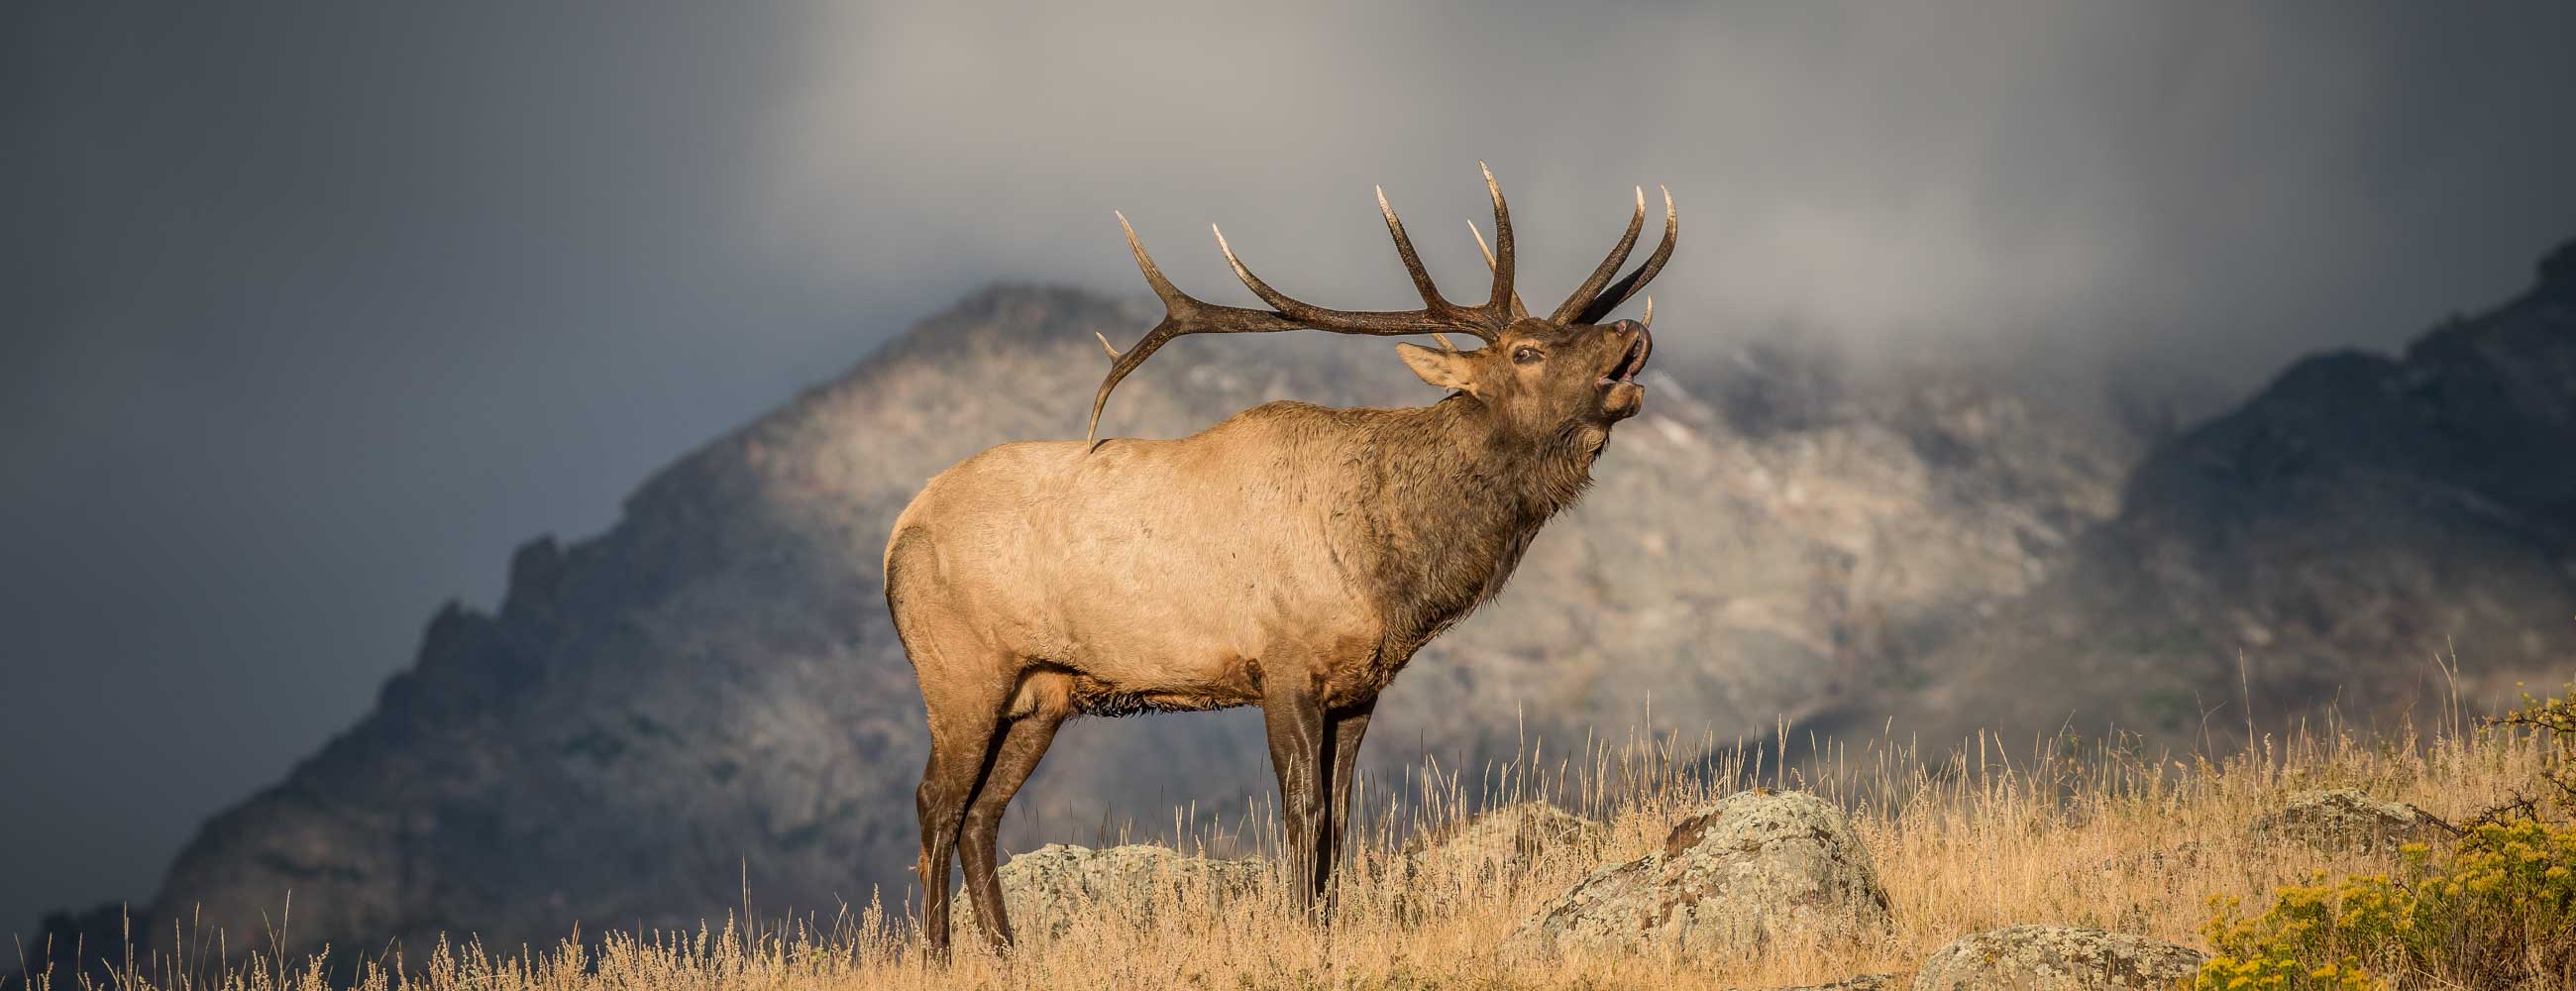 Home | Rocky Mountain Elk Foundation